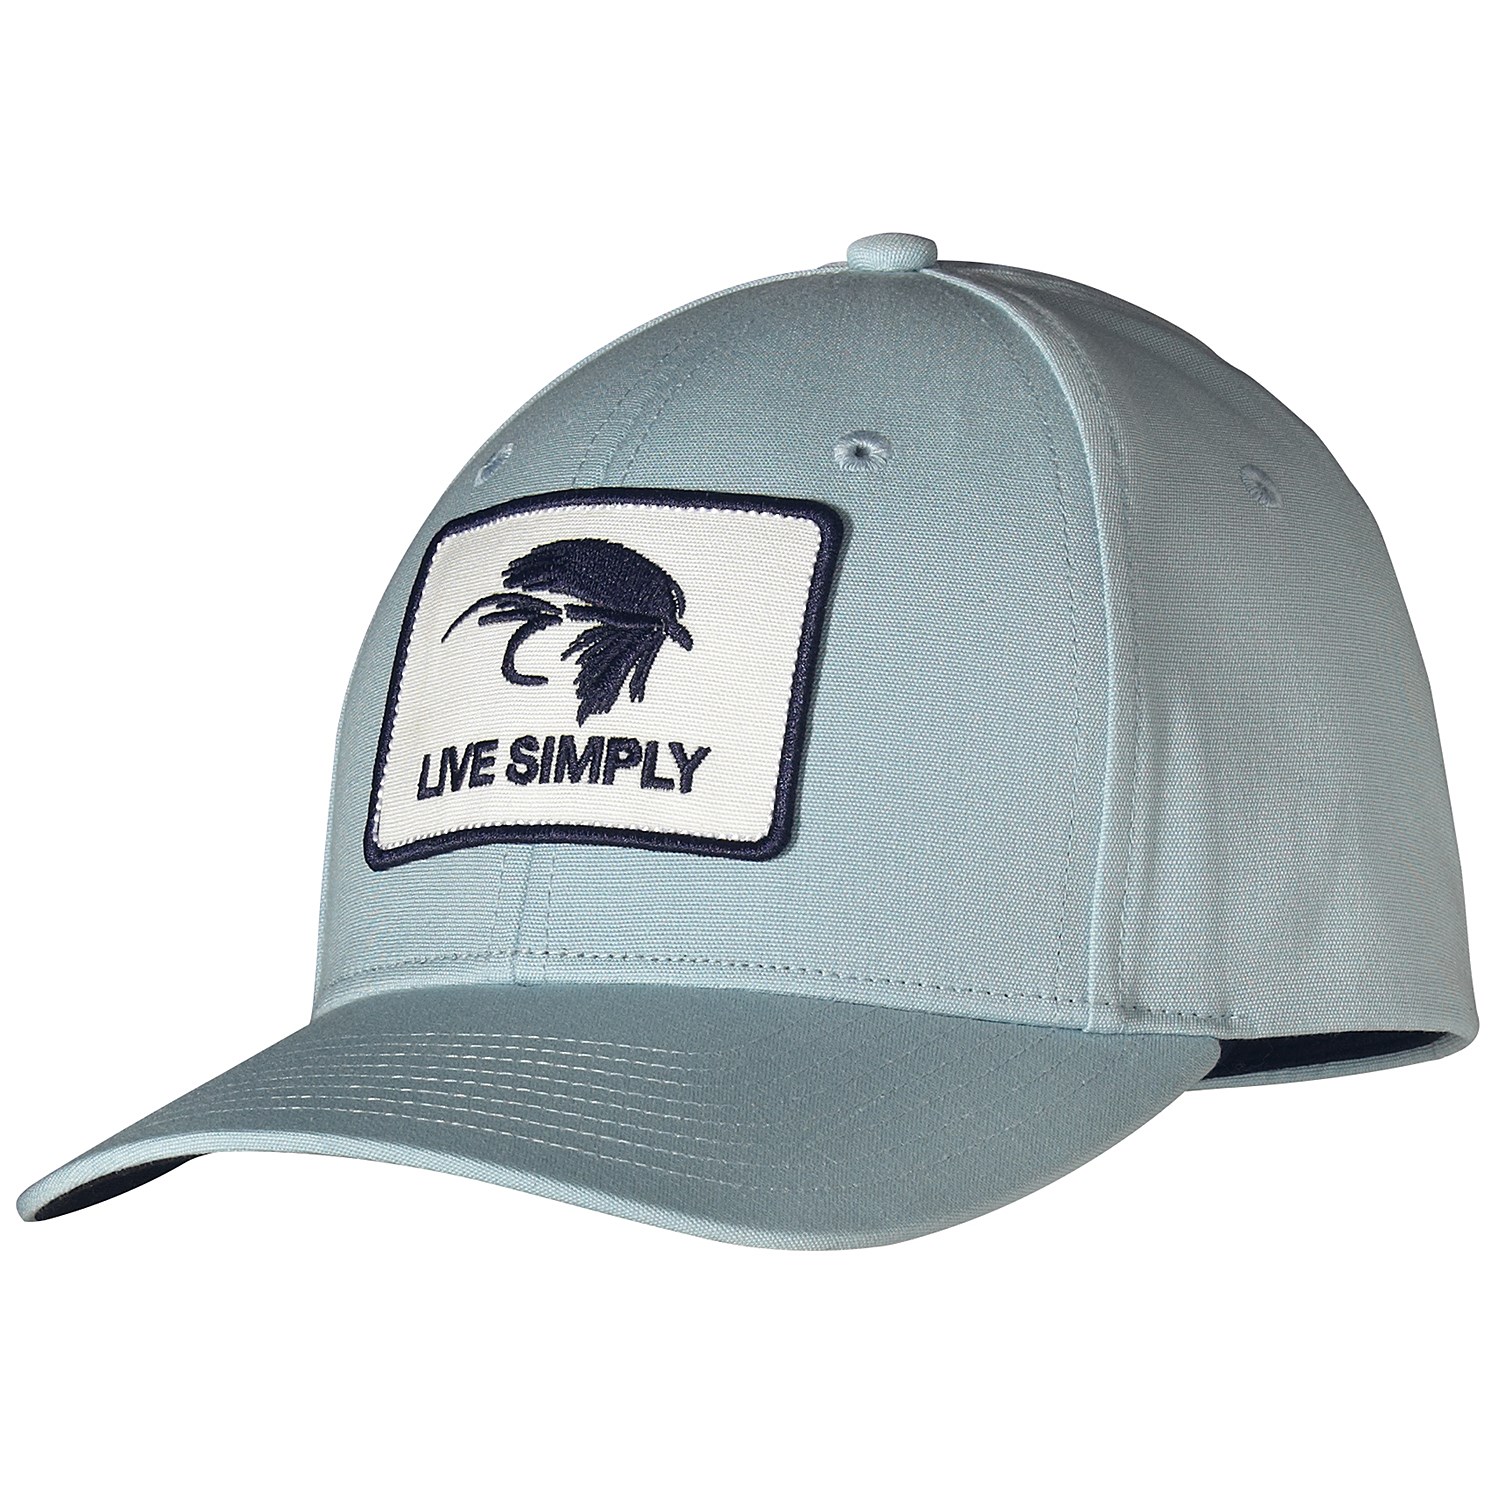 Simple hats. Funfarer Live simply кепка Patagonia. Кепка Patagonia Fishing. Бейсболка Live simply cap. Австралийский бренд одежды Кепки.